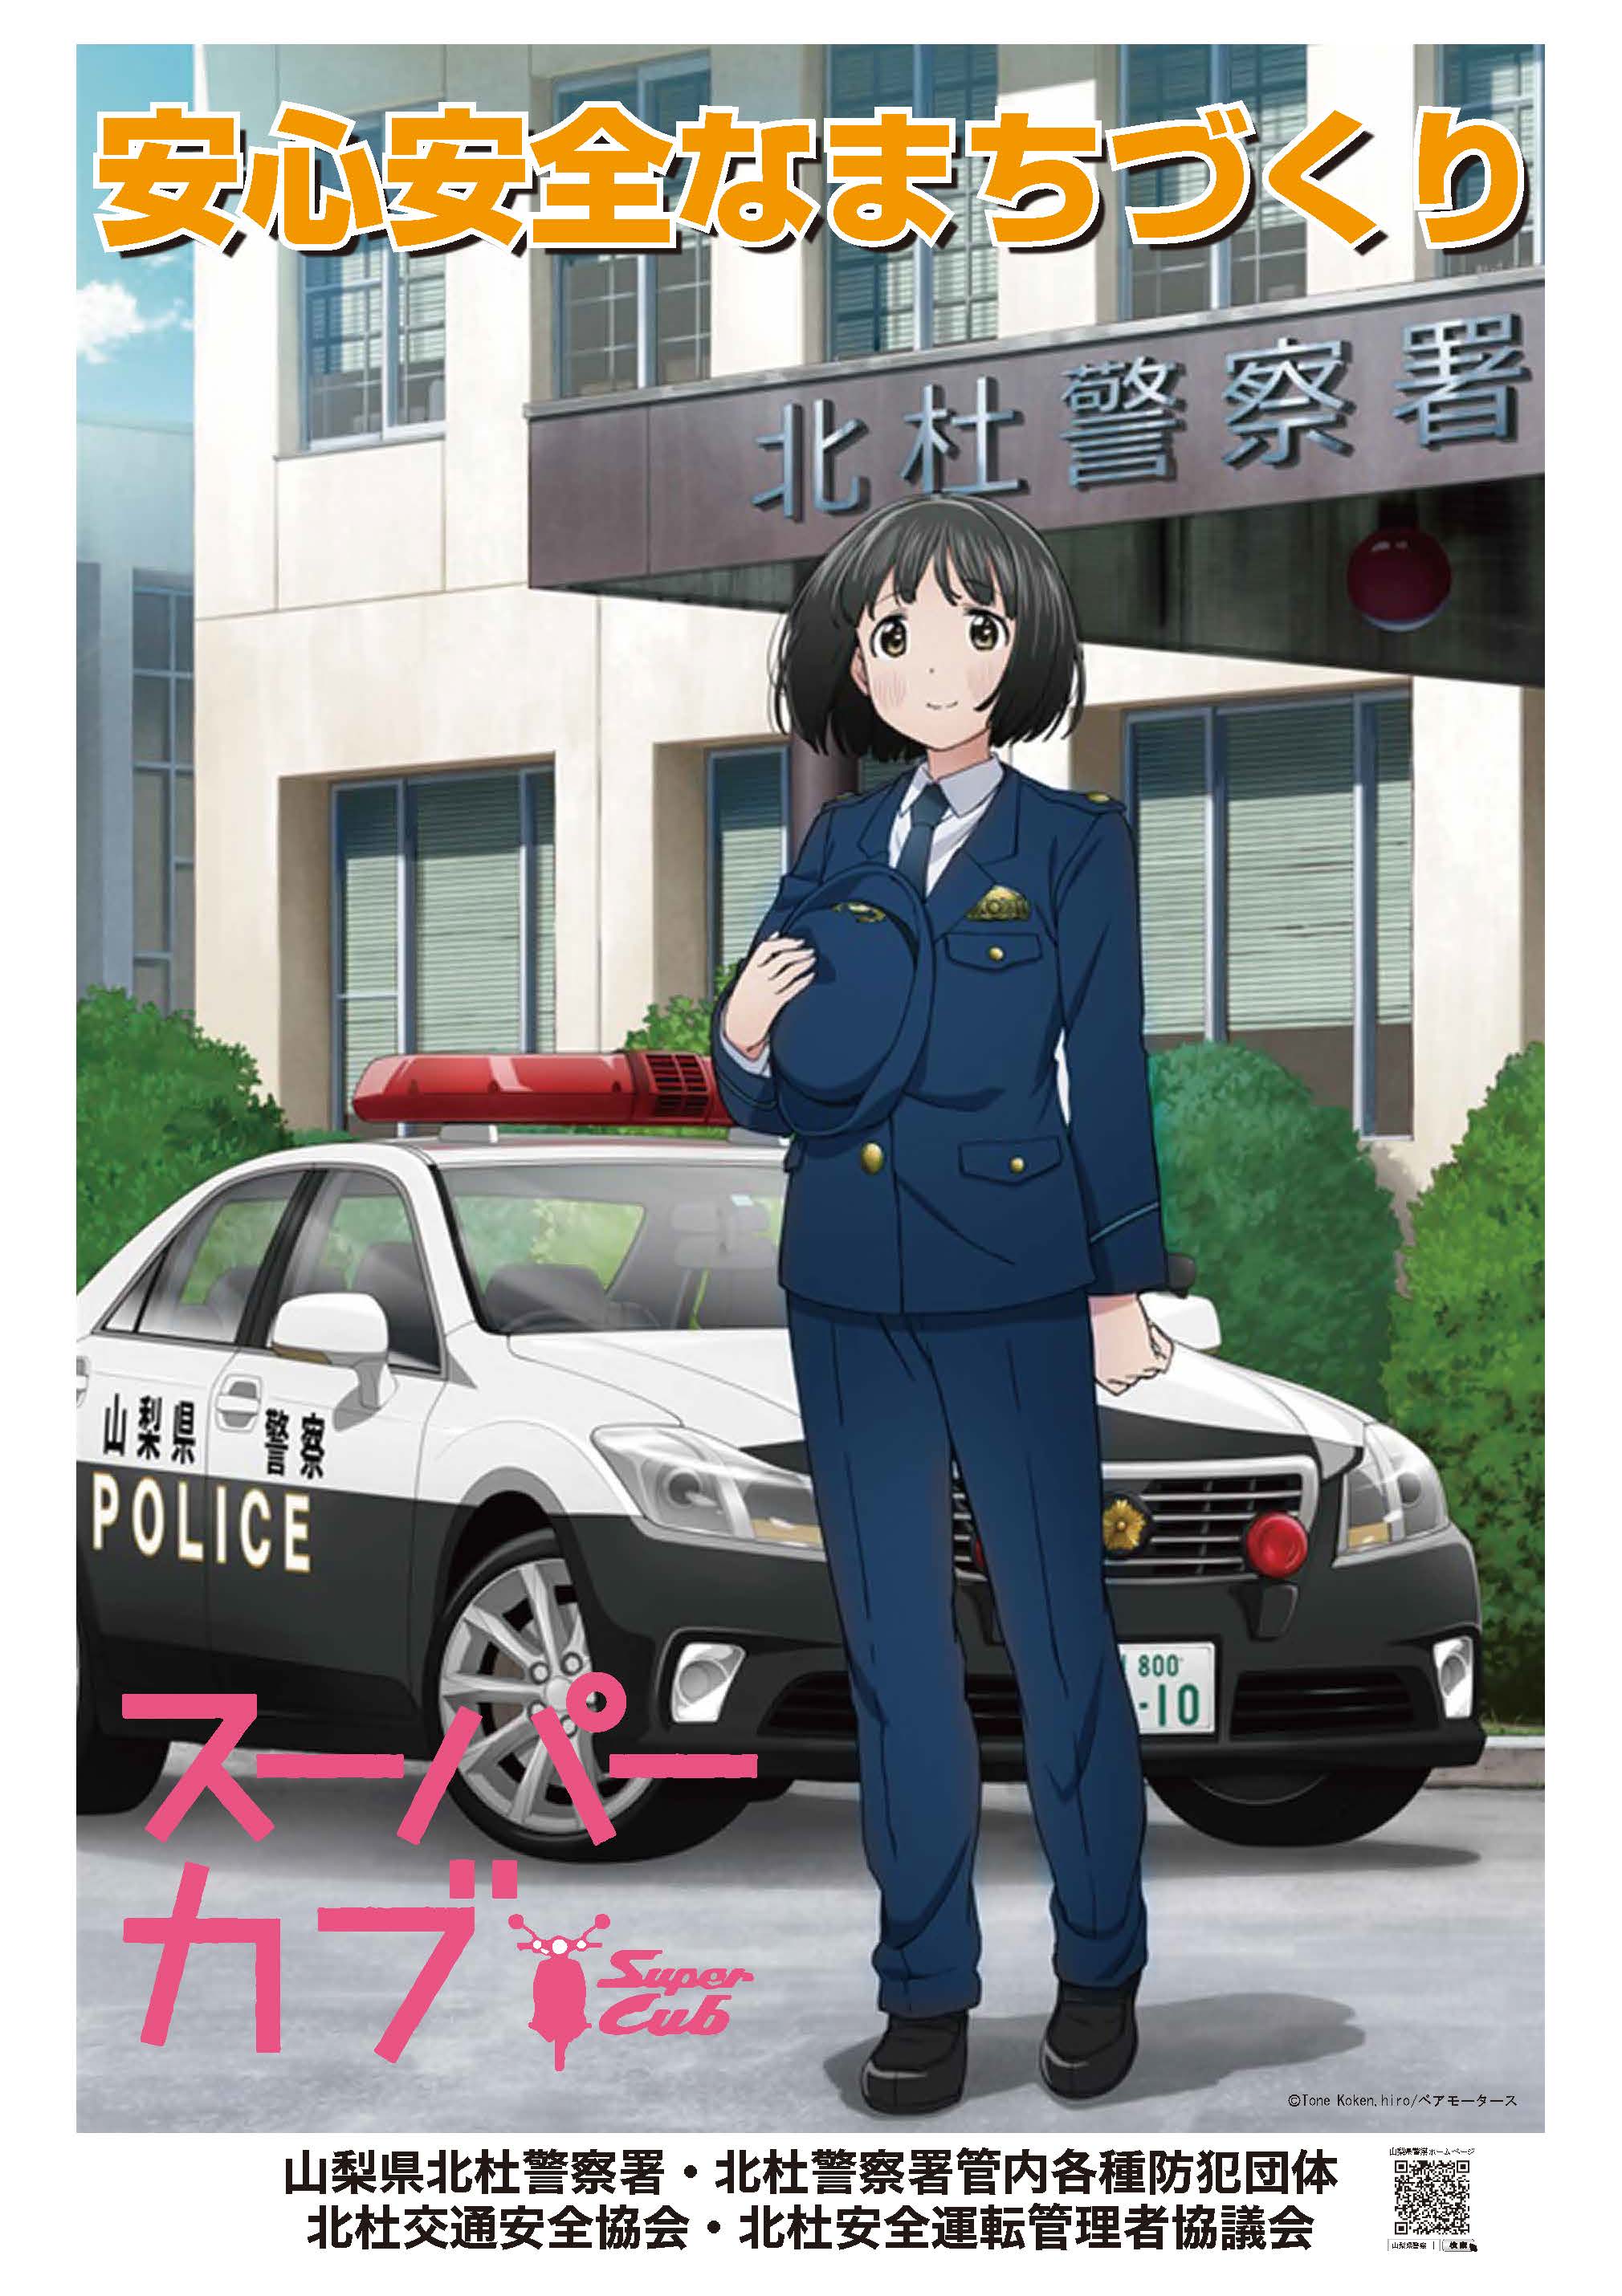 Yamanashi Prefectural Police Hokuto City Police Station x Super Club